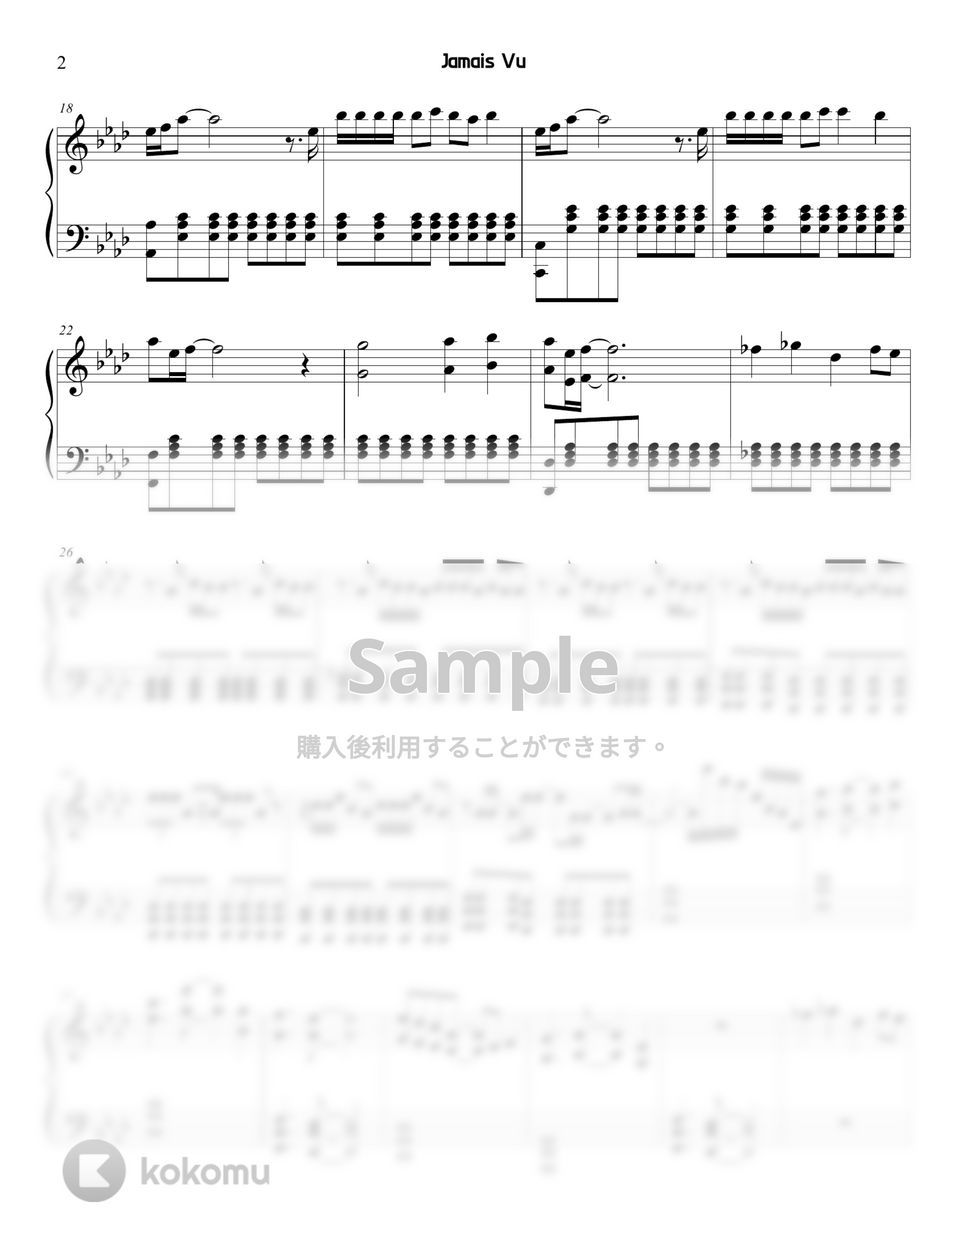 防弾少年団 (BTS) - Jamais Vu by Sunny Fingers Piano